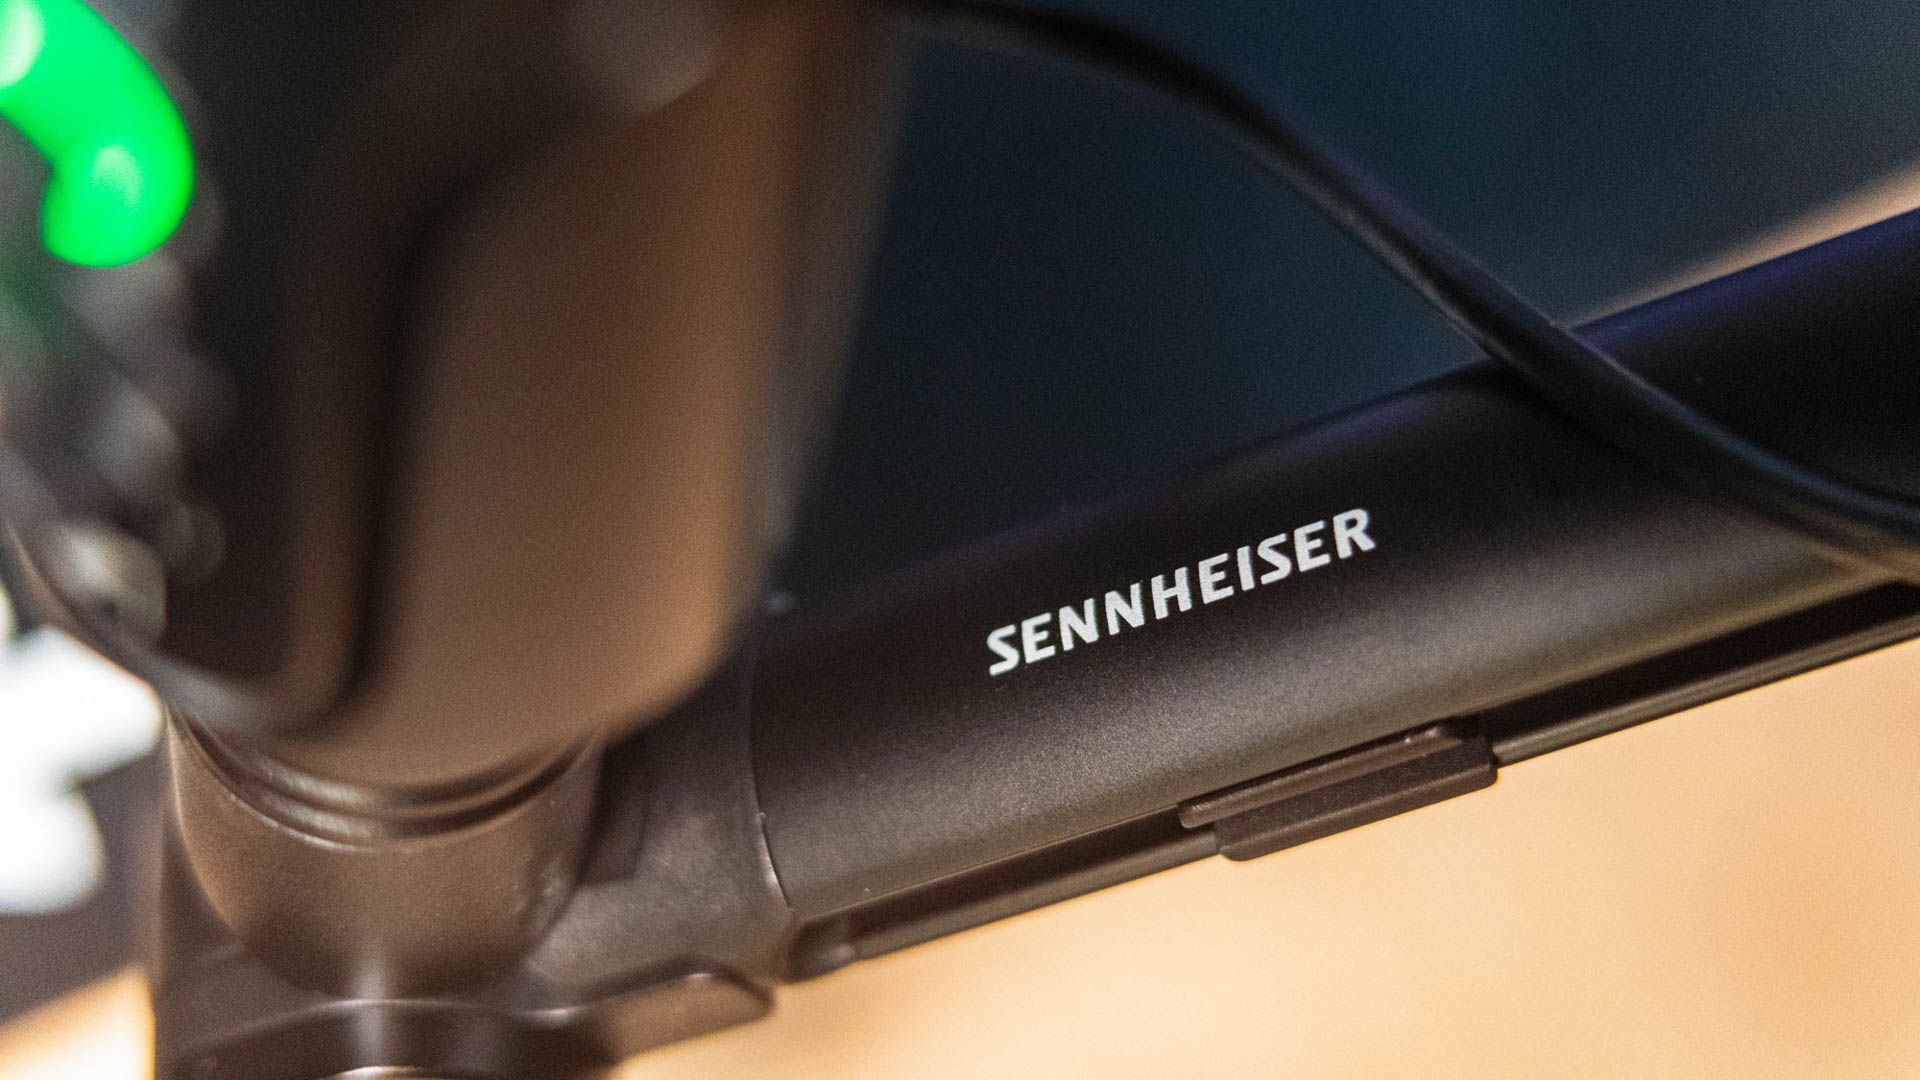 The Sennheiser logo on the Sennheiser Profile USB Mic